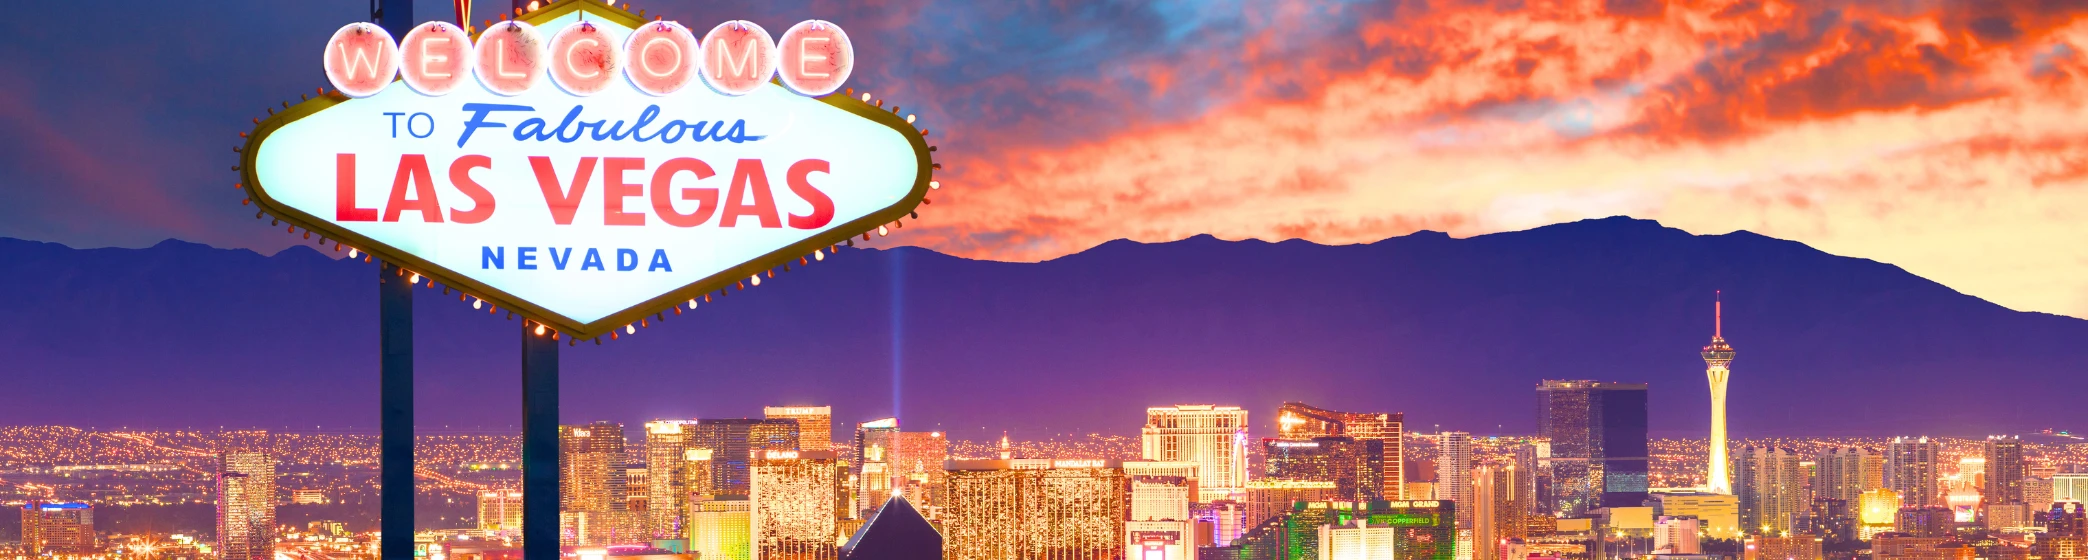 Las Vegas เมือง Work and Travel USA รัฐ Nevada NV New Step newstep WAT ฝึกงาน ทำงาน ต่างประเทศ เที่ยว อเมริกา USA โครงการแลกเปลี่ยน วัฒนธรรม new step newstep